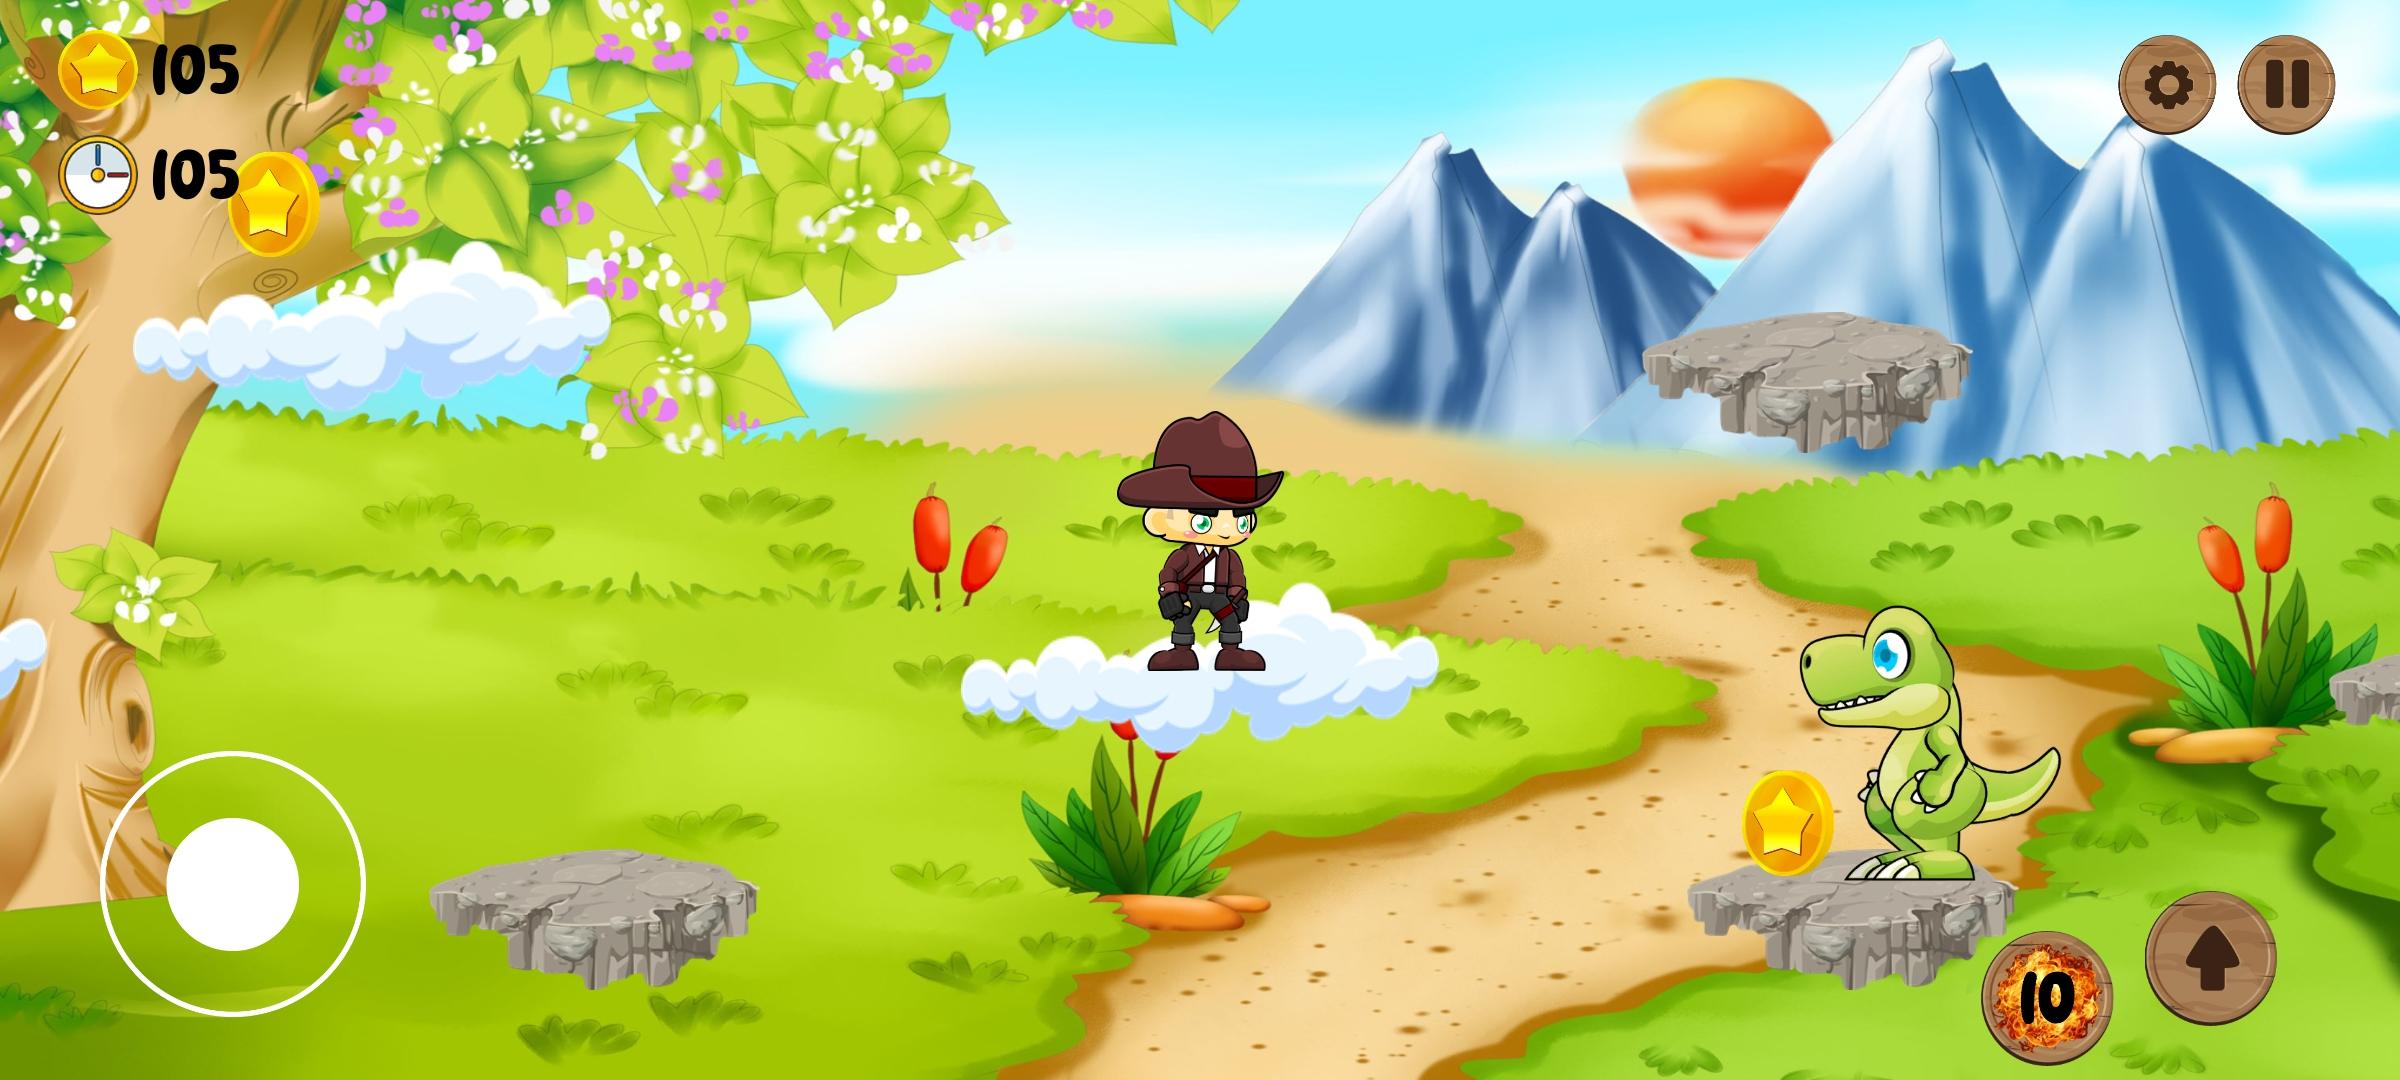 RFG - Adventure Boy 1.6 Screenshot 11